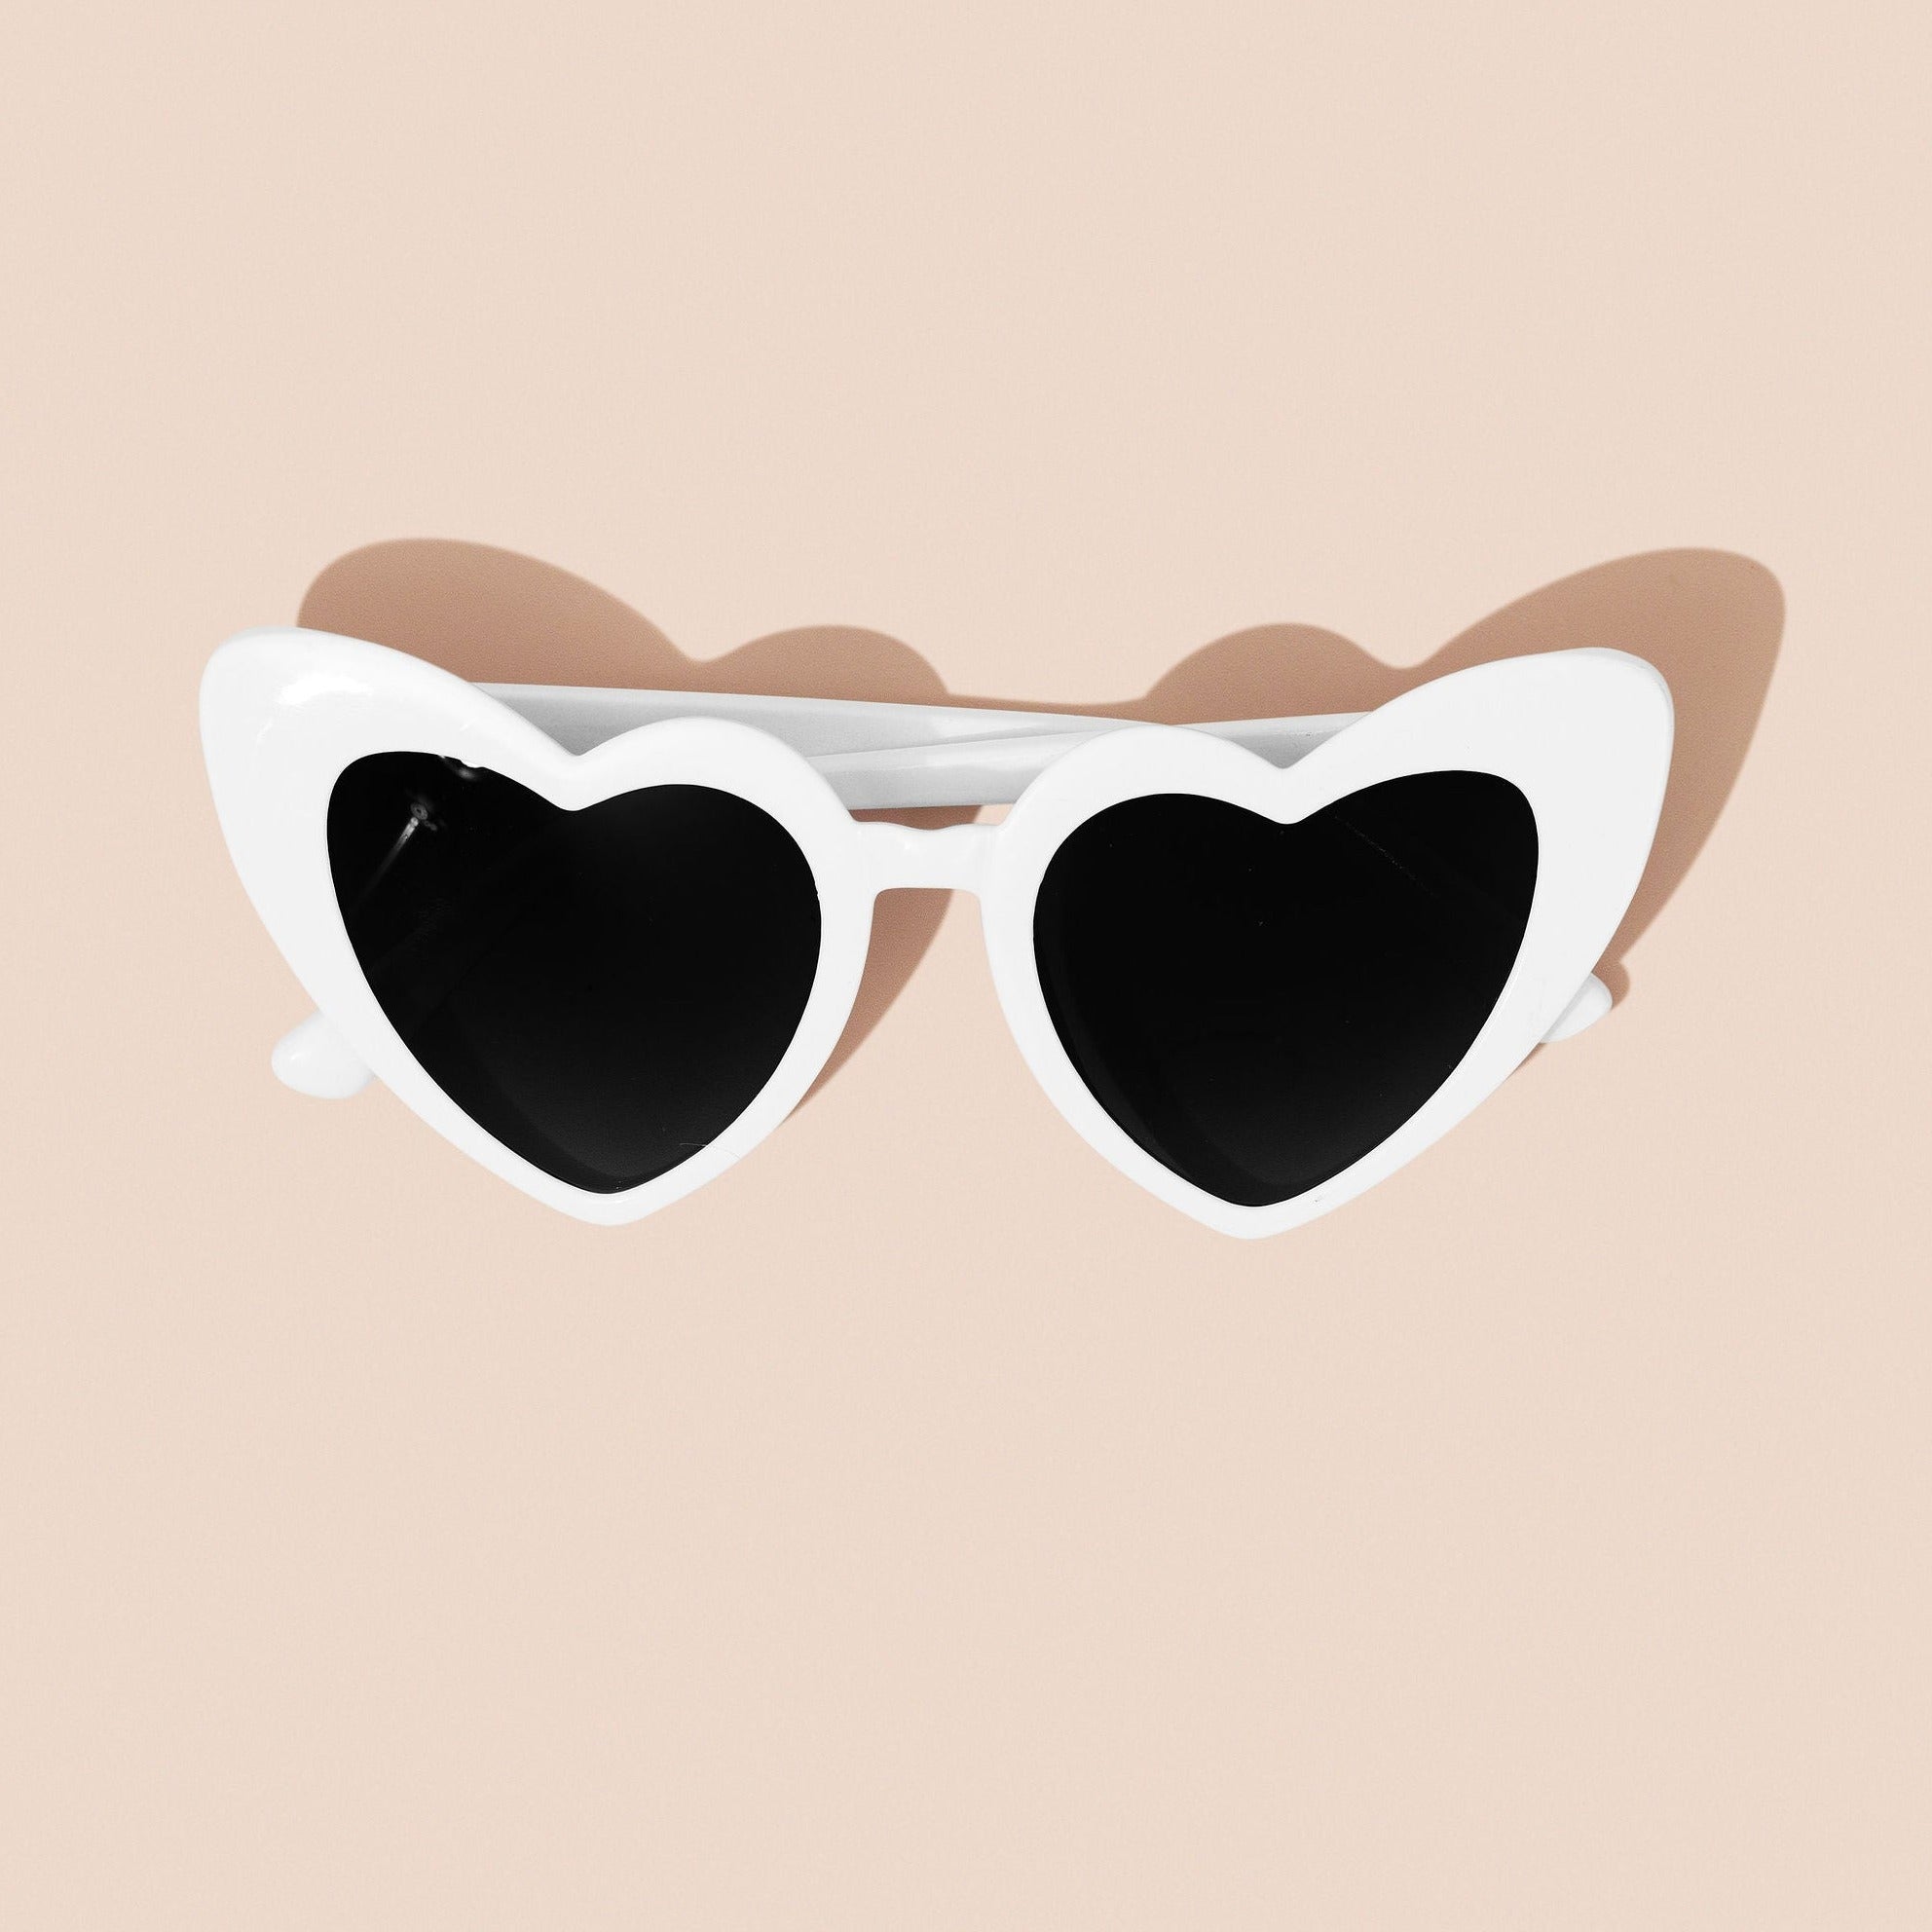 Classic white heart sunglasses